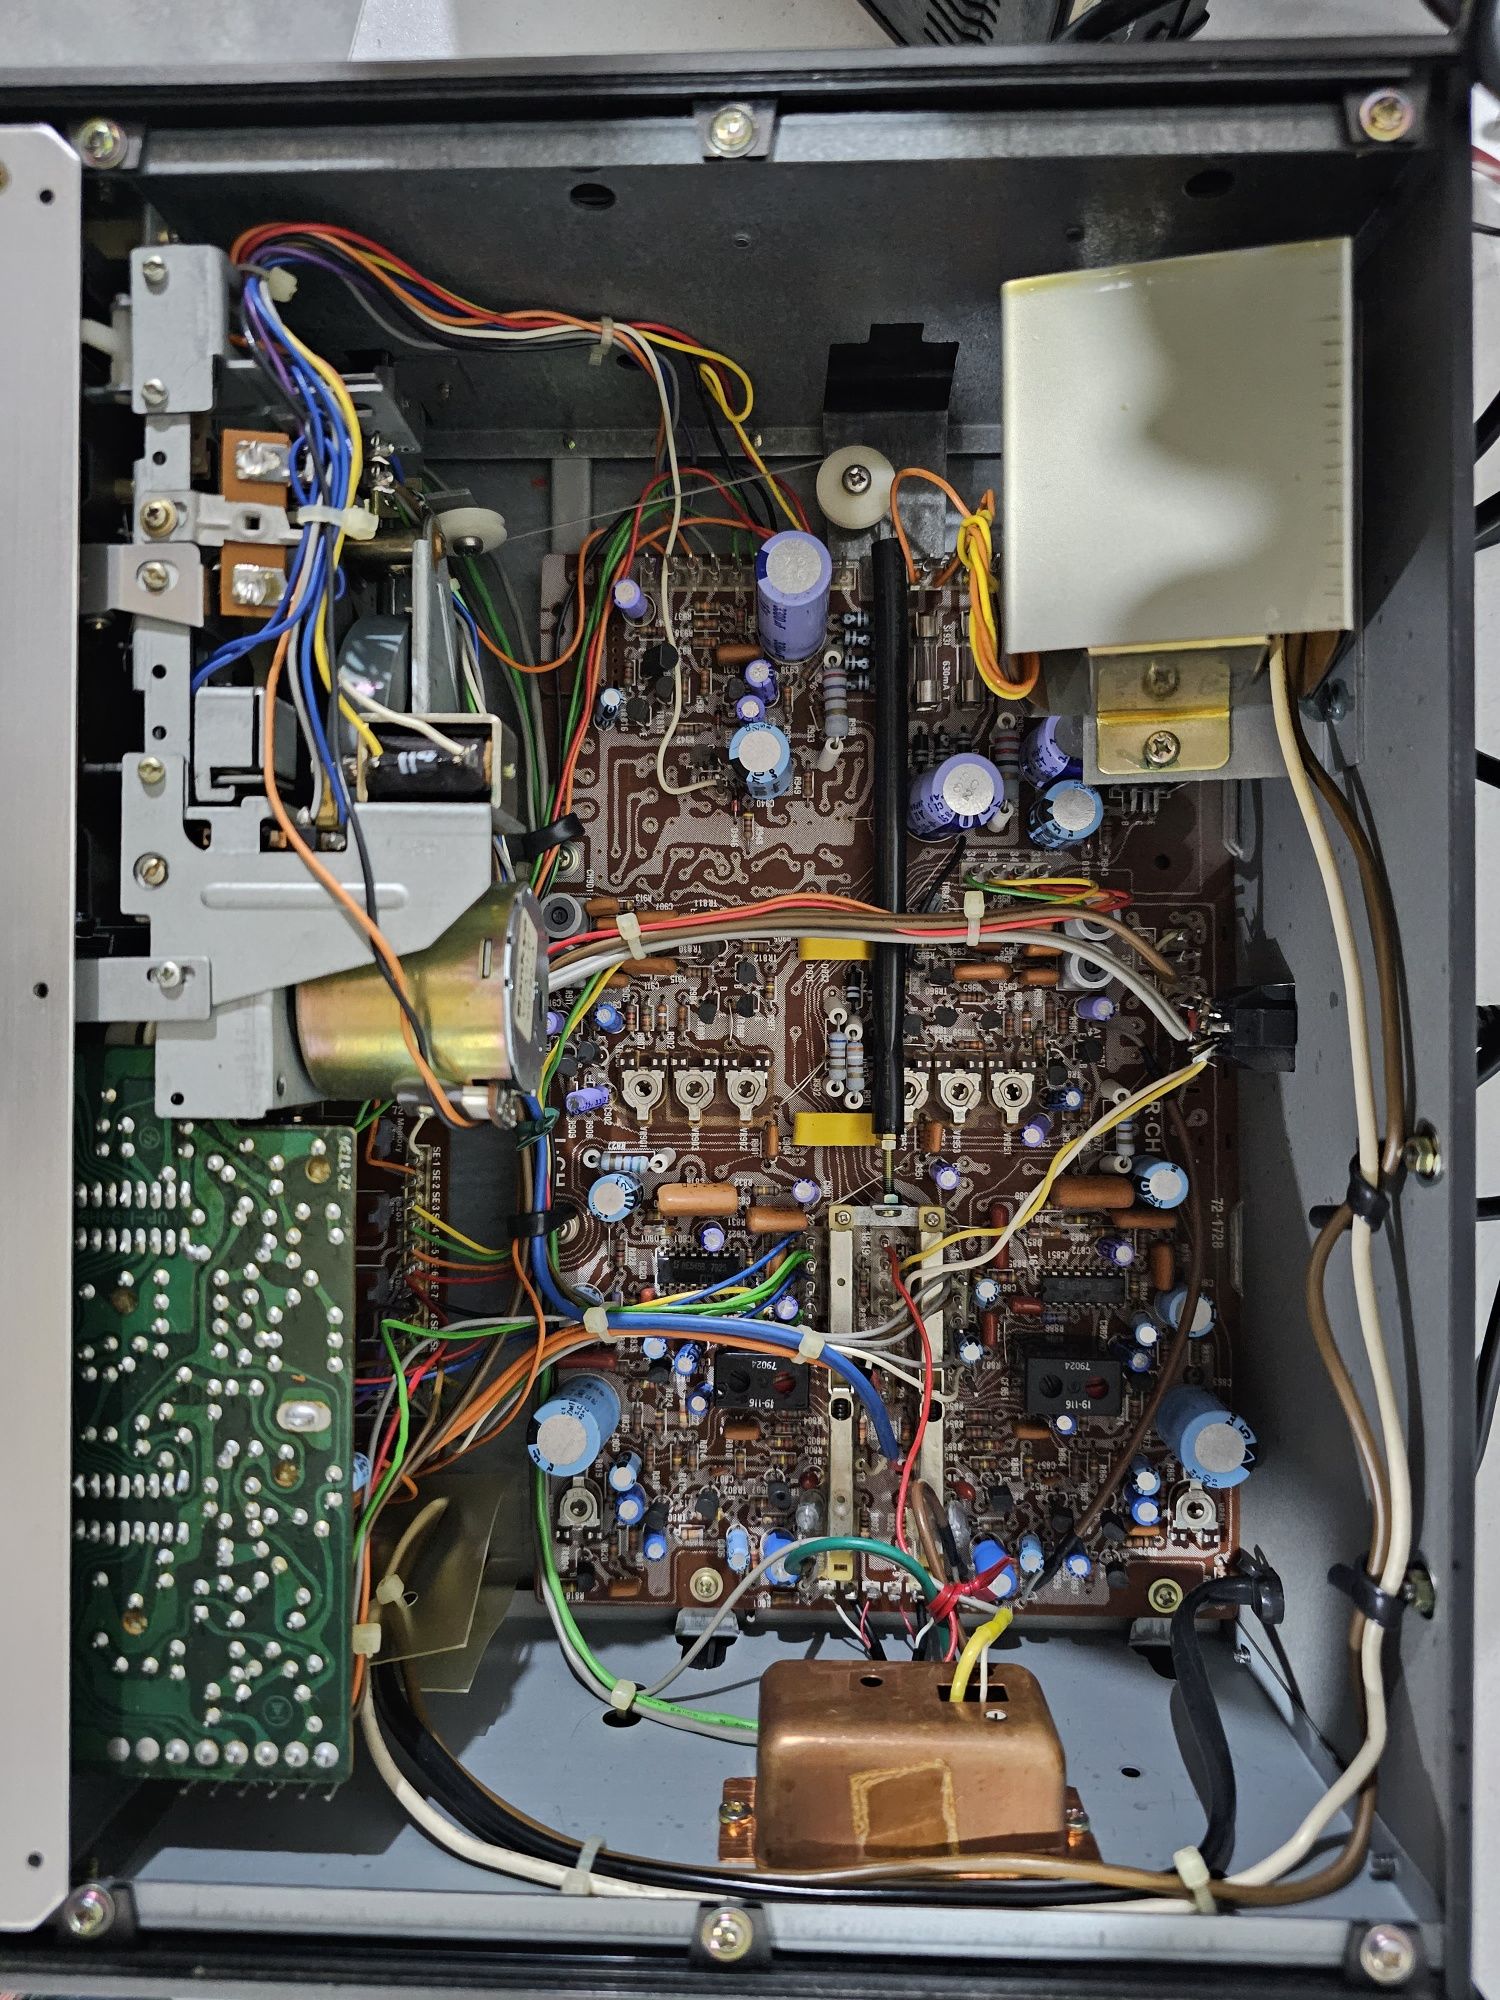 micro sistem hifi ADYTUM M300,deck,egalizator,tuner,amplificator,timer